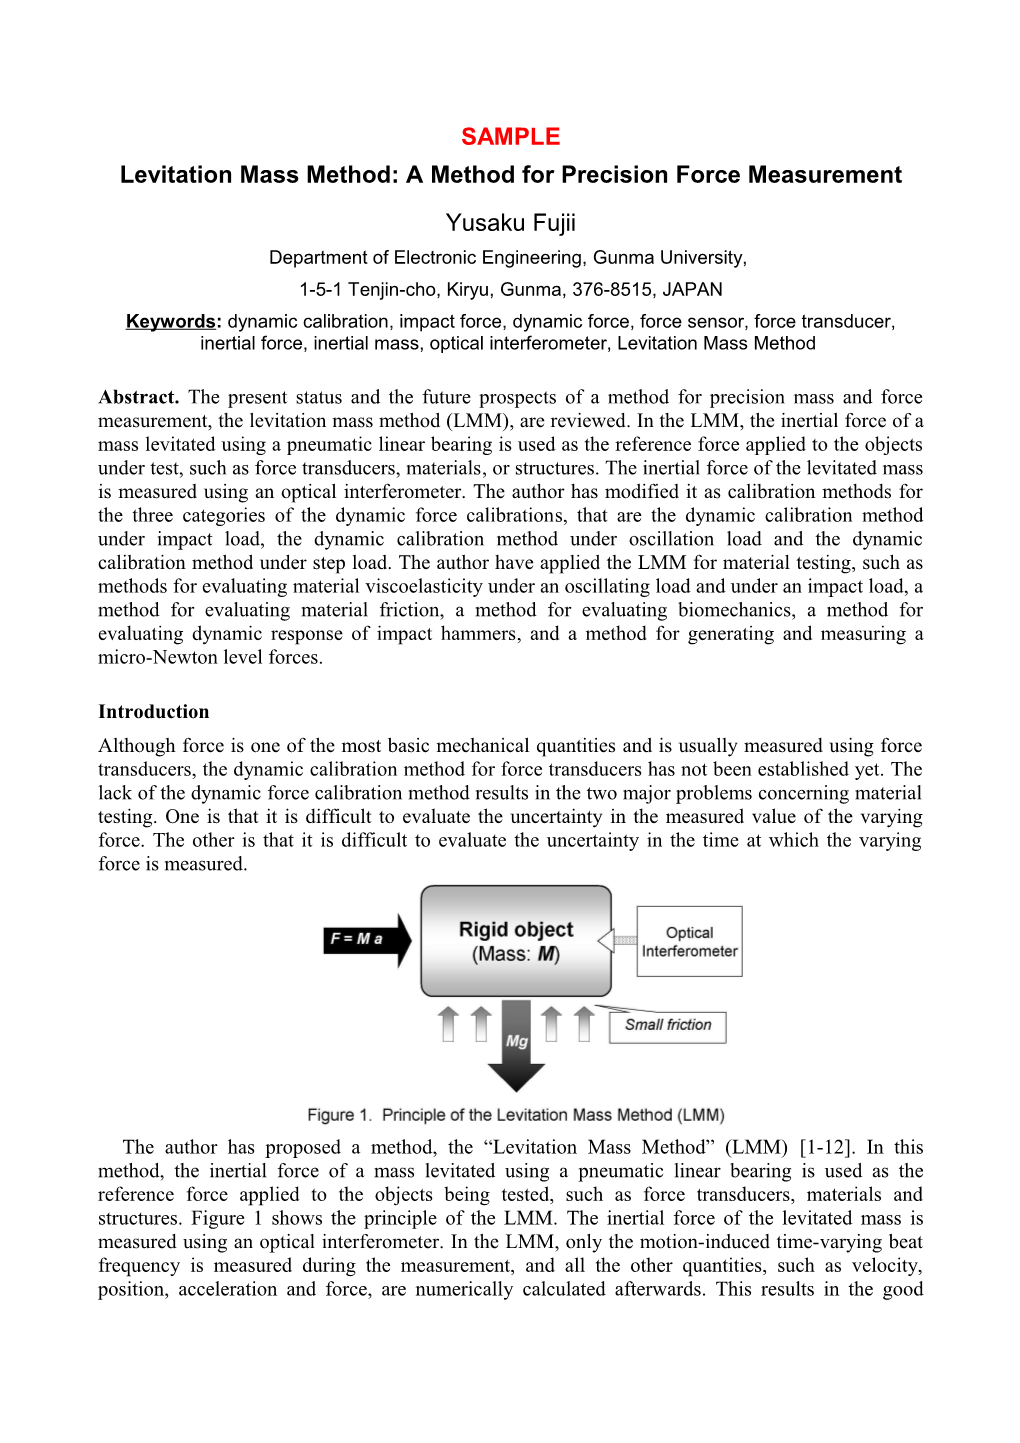 Levitation Mass Method: a Method for Precision Force Measurement